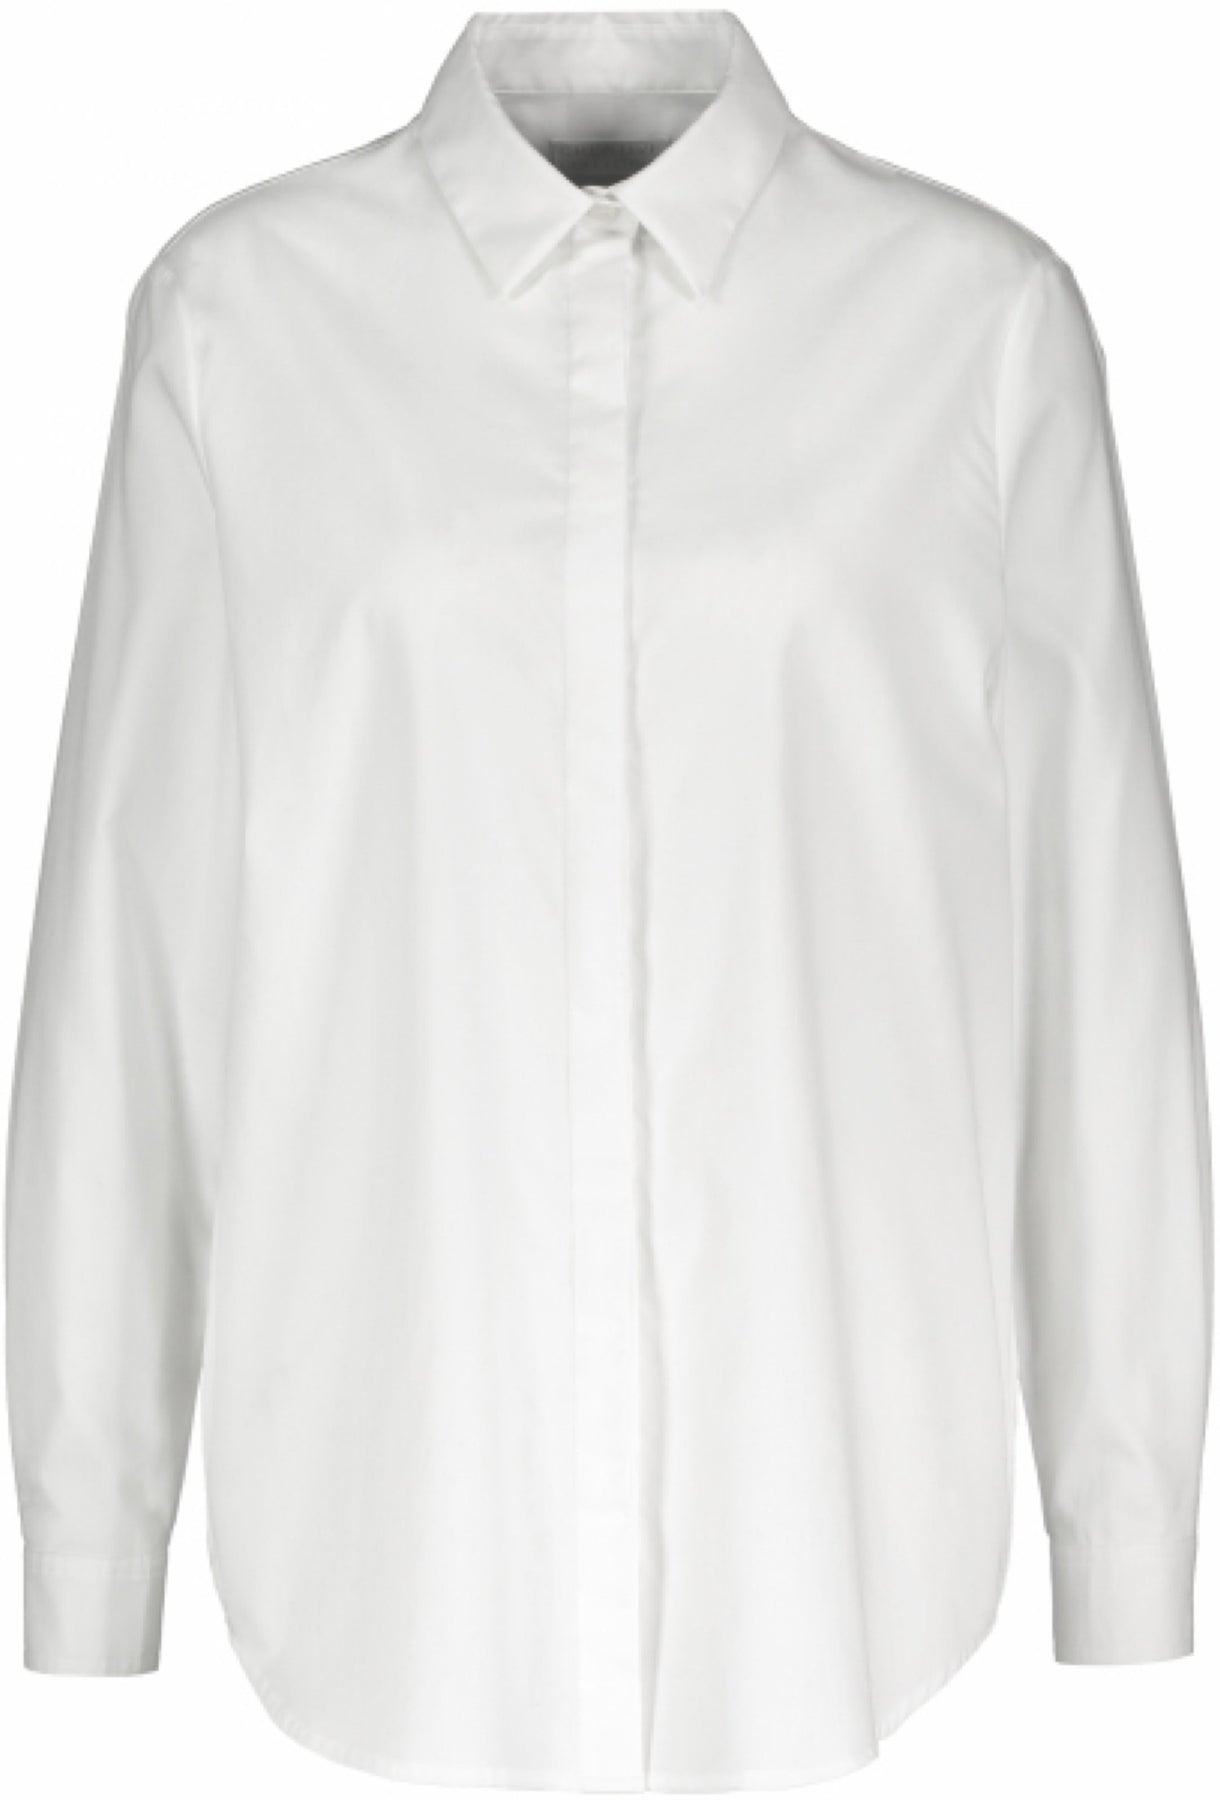 Cala Shirt - Bright White - Creative Collective - Bluser & Skjorter - VILLOID.no